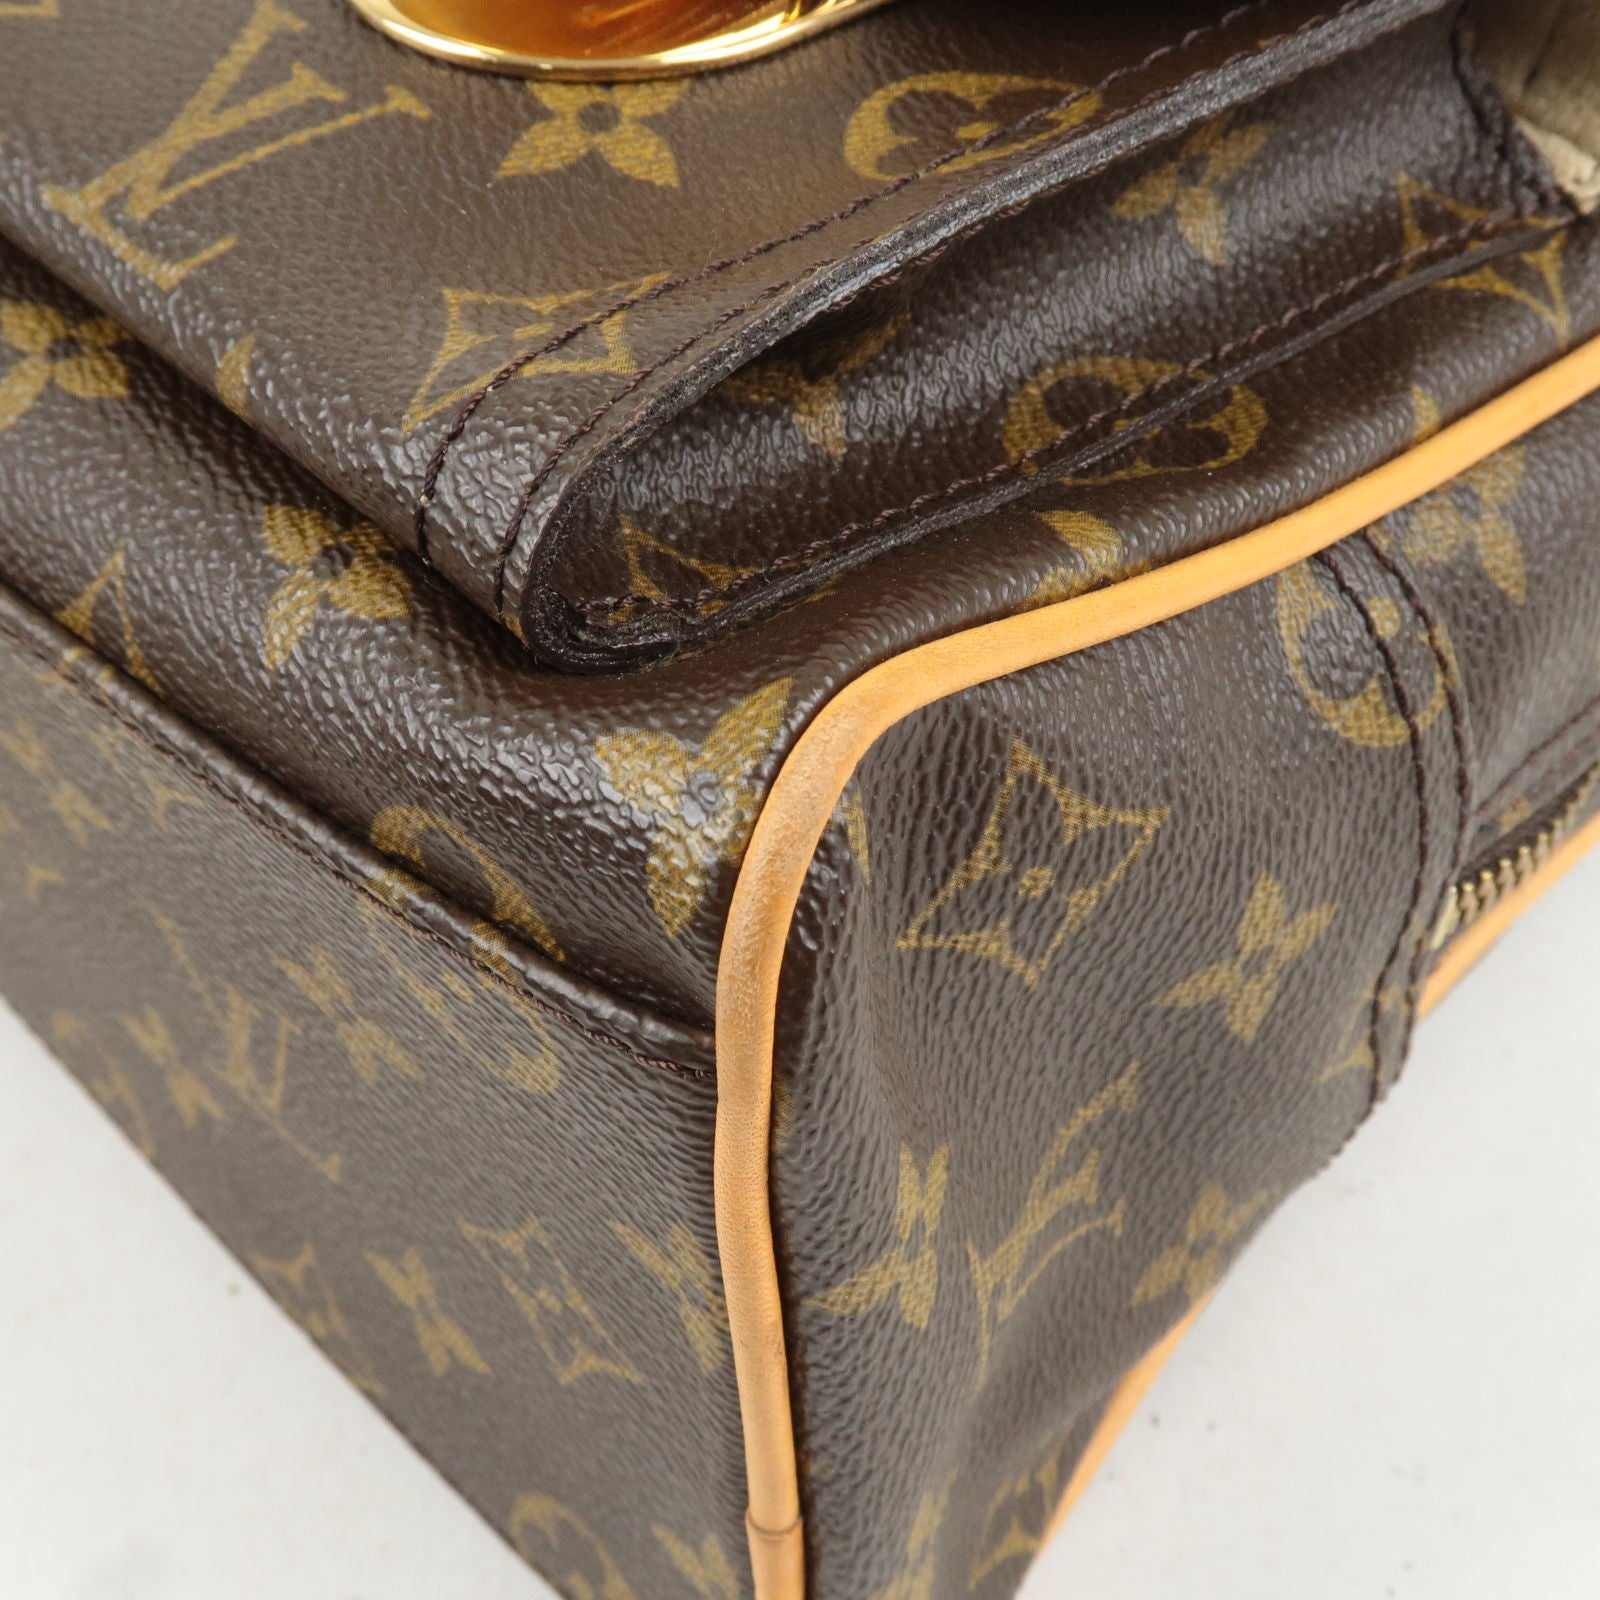 Louis Vuitton Manhattan PM M40026 Monogram Canvas Handbag Brown Gold